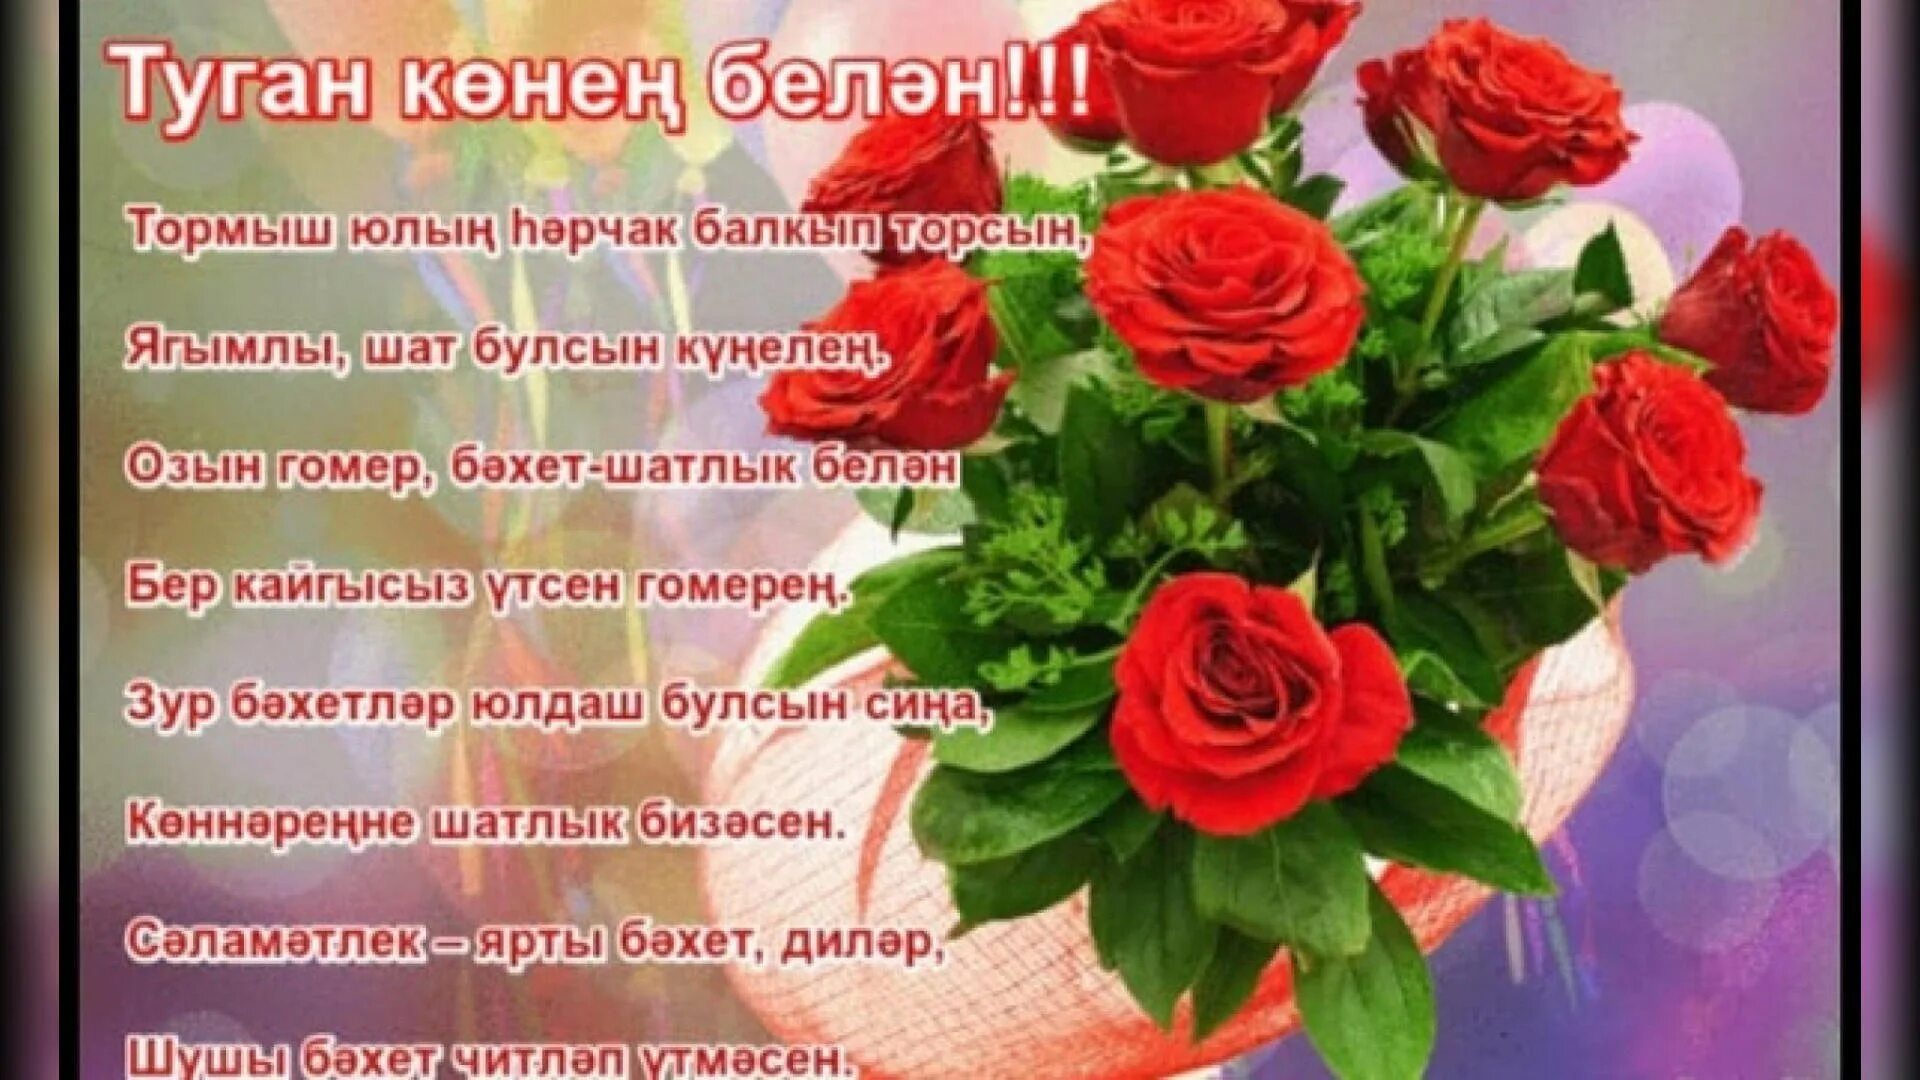 Туганым туган конен. Татарские поздравления с днем рождения. Поздравления с днём рождения на татарском языке. Поздравления с днём рождения женщине на татарском языке. Поздравления с днём рождения женщине на татарском.